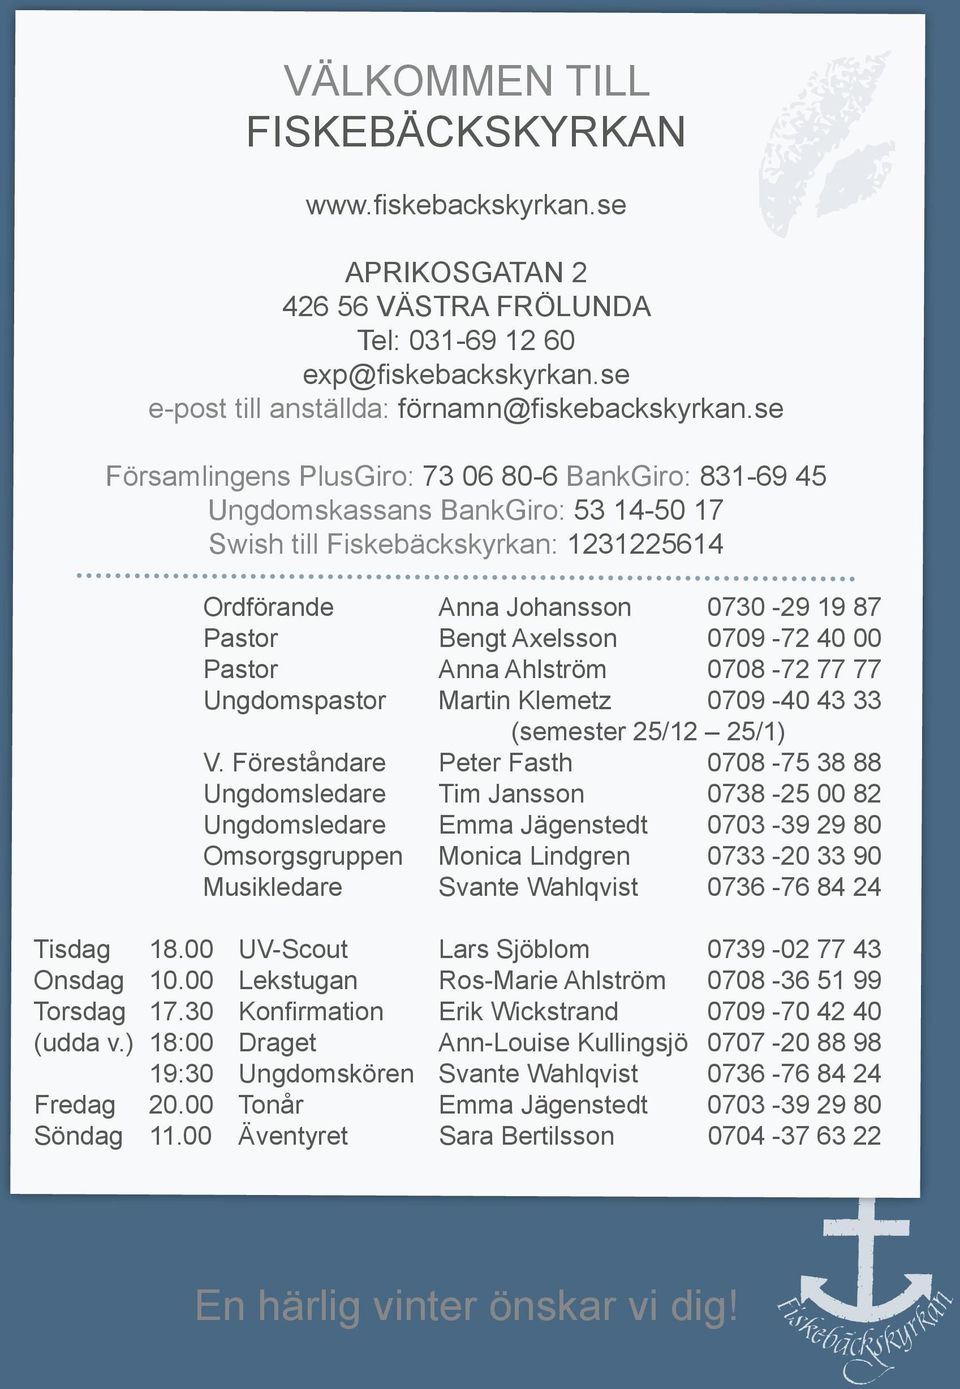 0709-72 40 00 Pastor Anna Ahlström 0708-72 77 77 Ungdomspastor Martin Klemetz 0709-40 43 33 (semester 25/12 25/1) V.